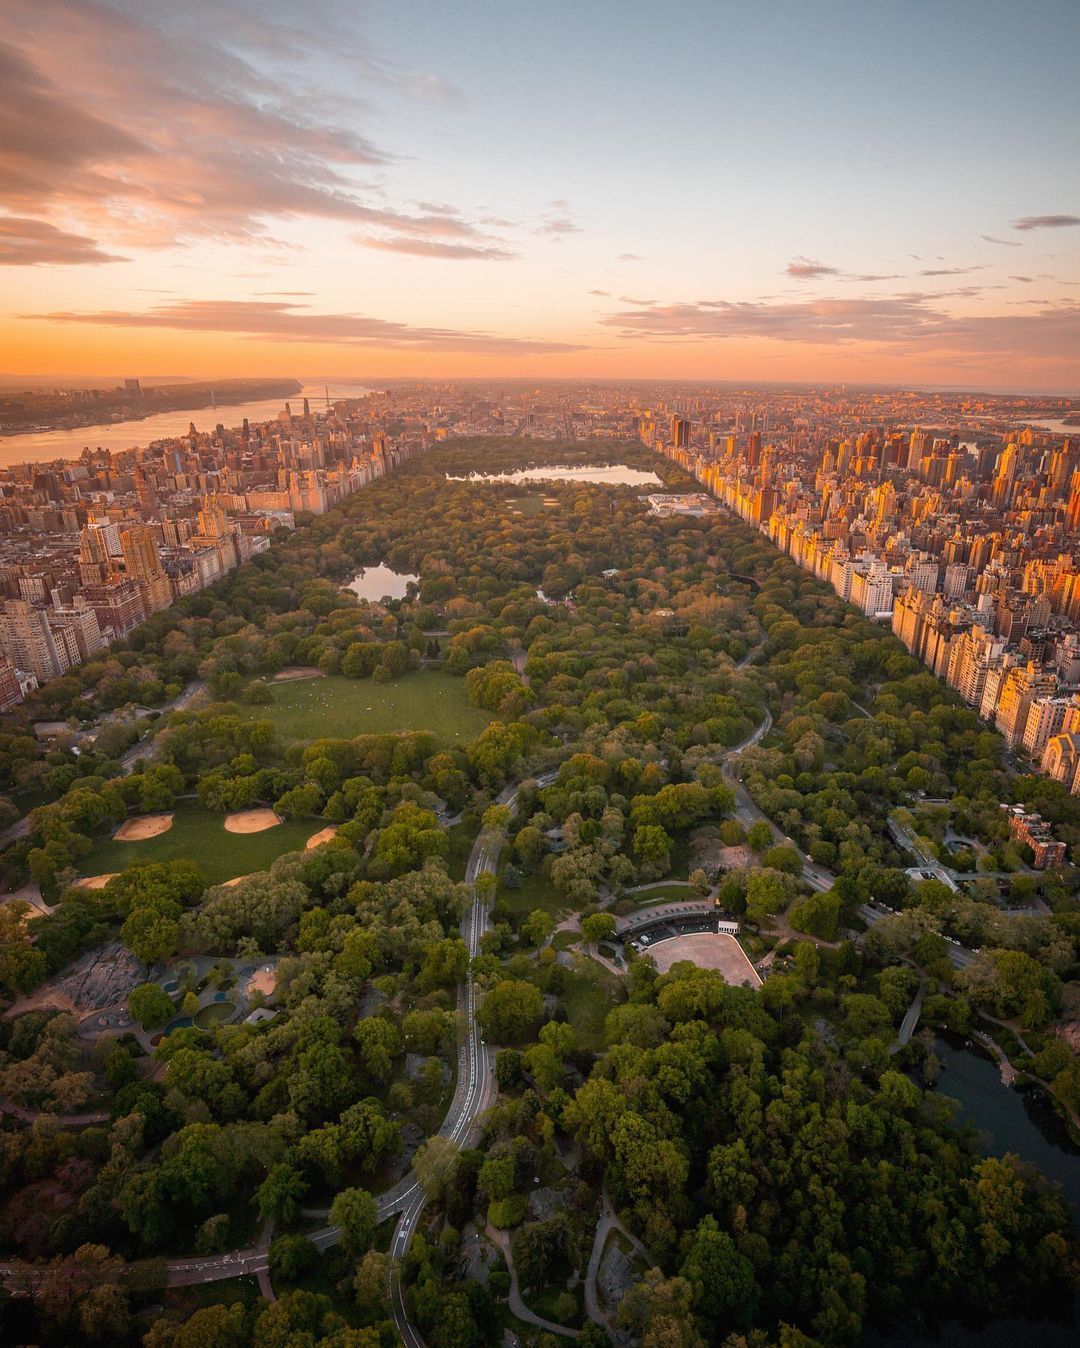 Central Park 4k Wallpapers - Top Free Central Park 4k Backgrounds ...